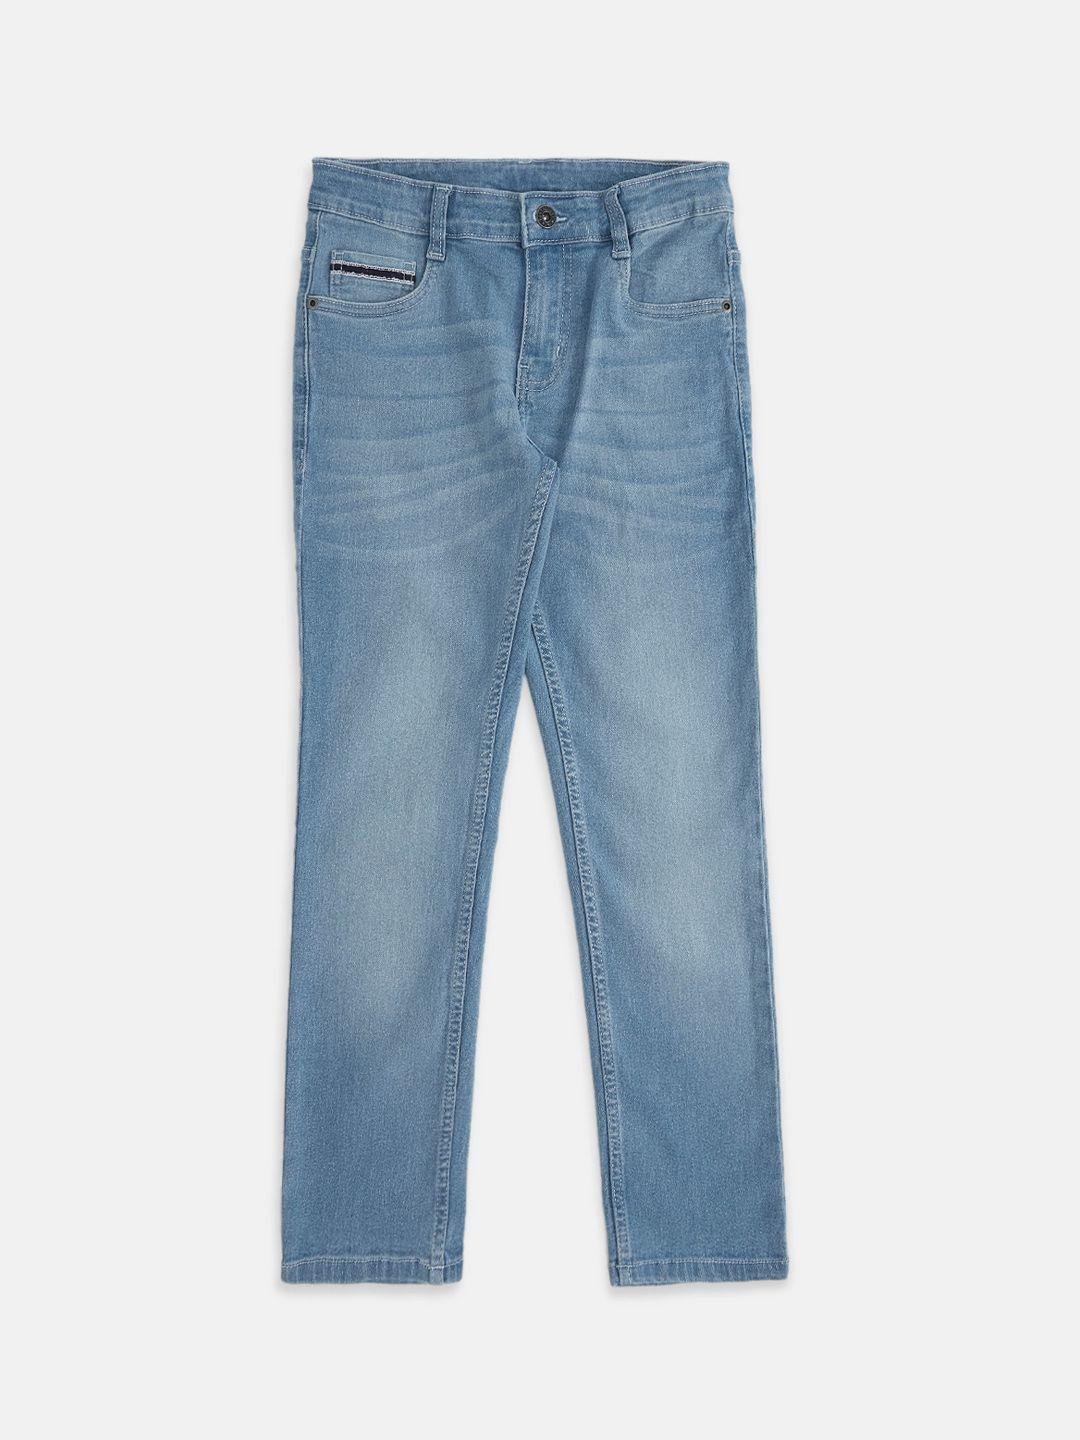 pantaloons-junior-boys-low-distress-light-fade-stretchable-jeans